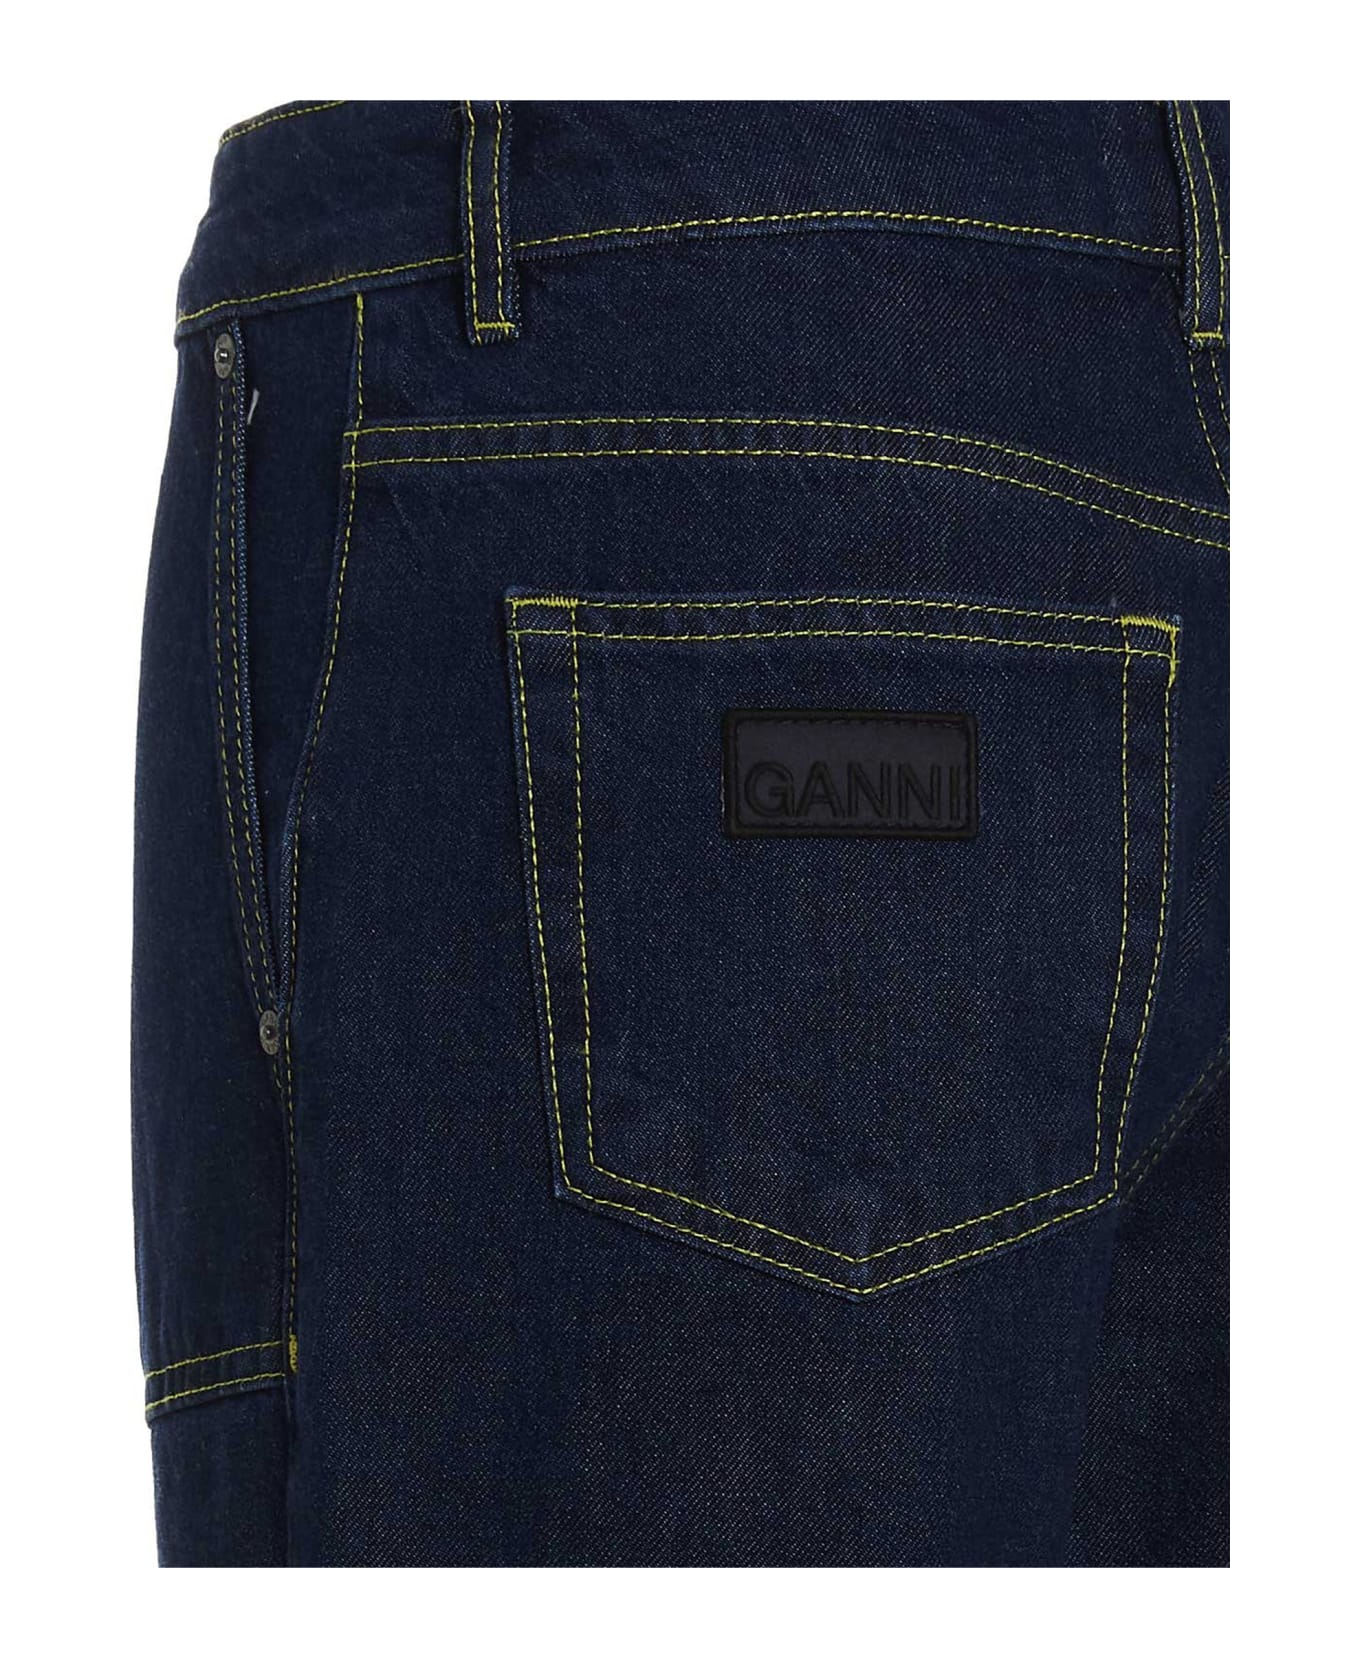 Ganni Cargo Jeans